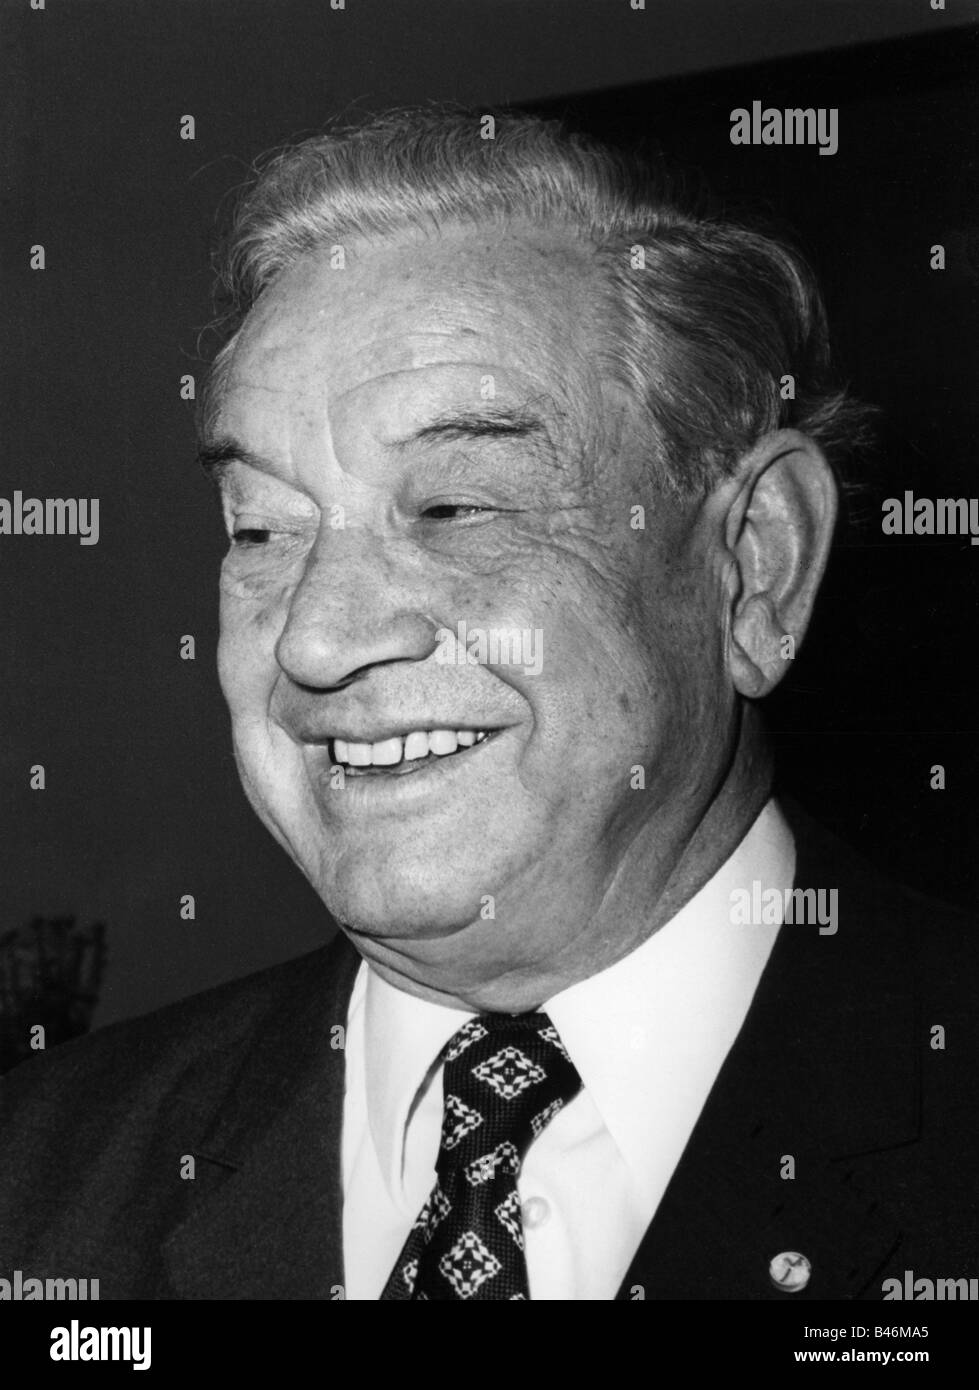 Goppel, Alfons, 1.10.1905 - 24 12.1991, German politician (CSU), Prime Minister of Bavaria 11.12.1962 - 7.11.1978, Portrait, 1973, , Stock Photo